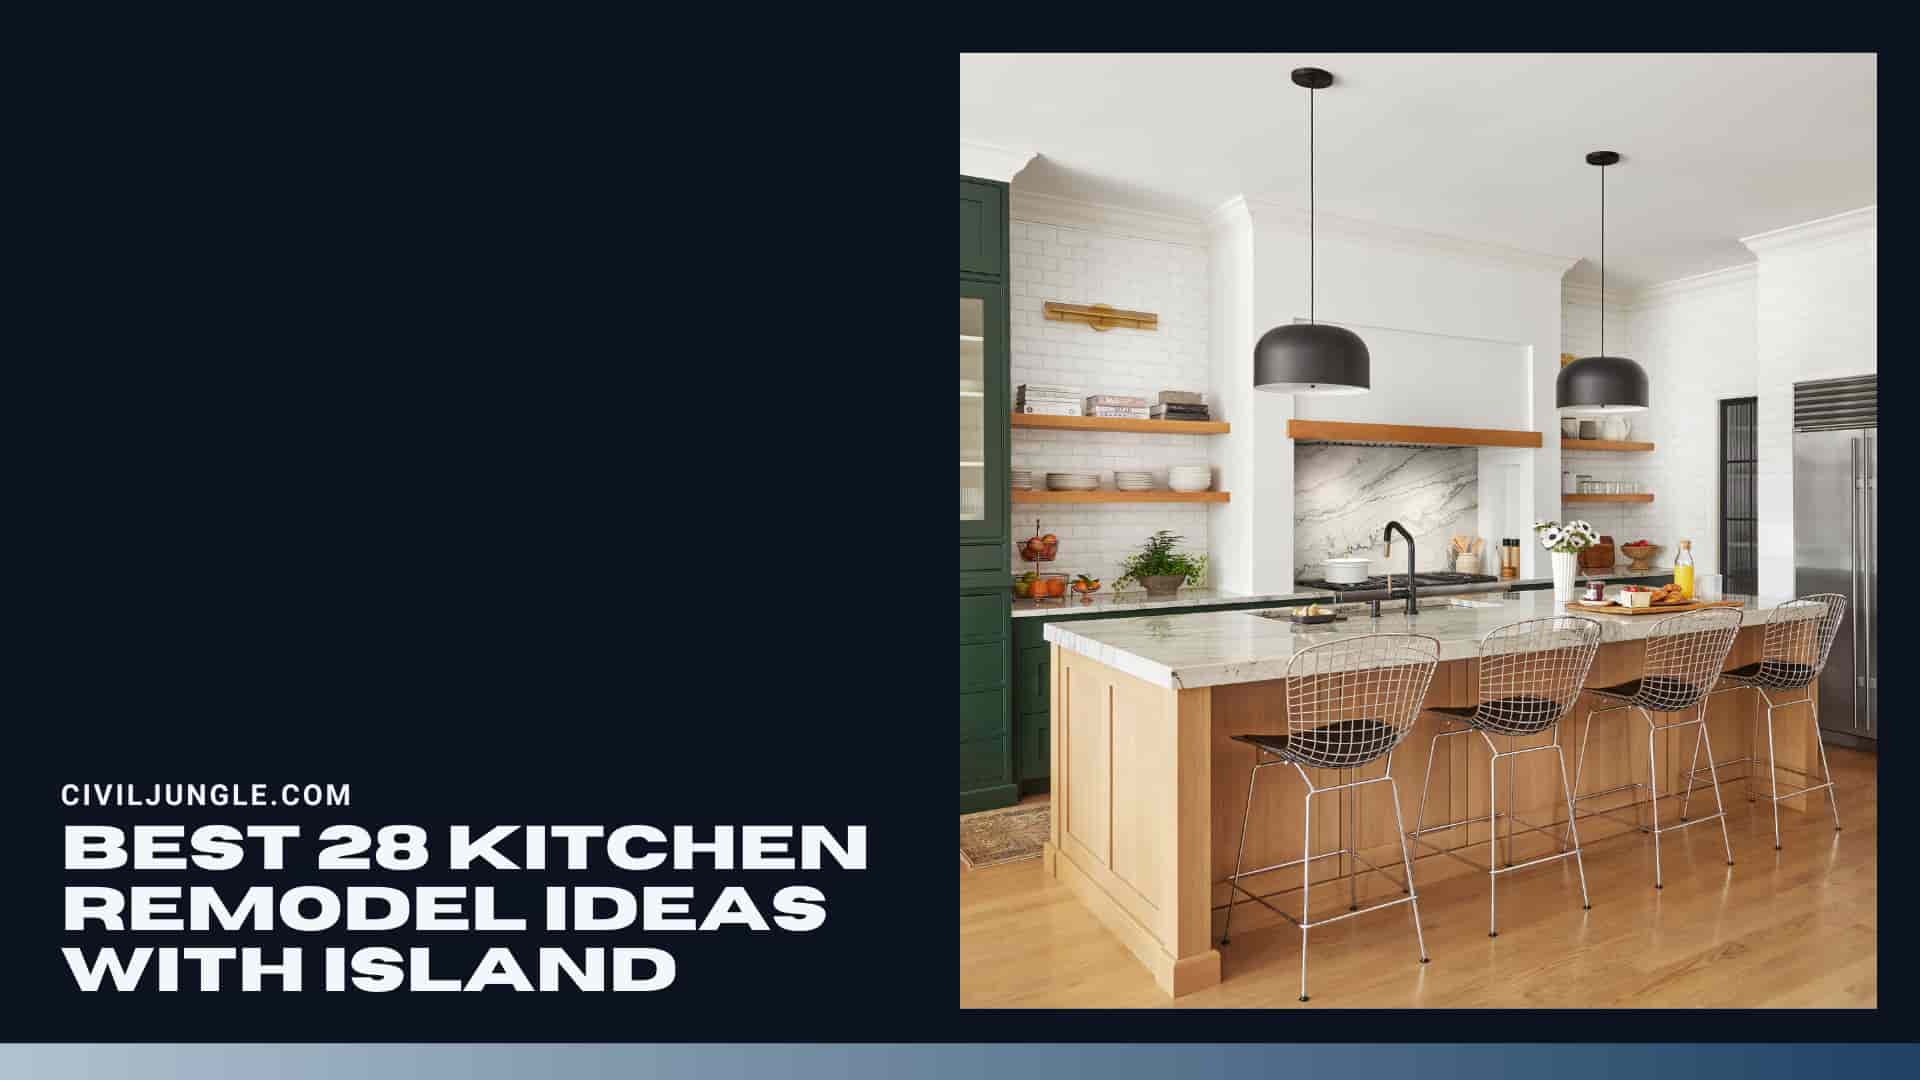 Best 28 Kitchen Remodel Ideas with Island